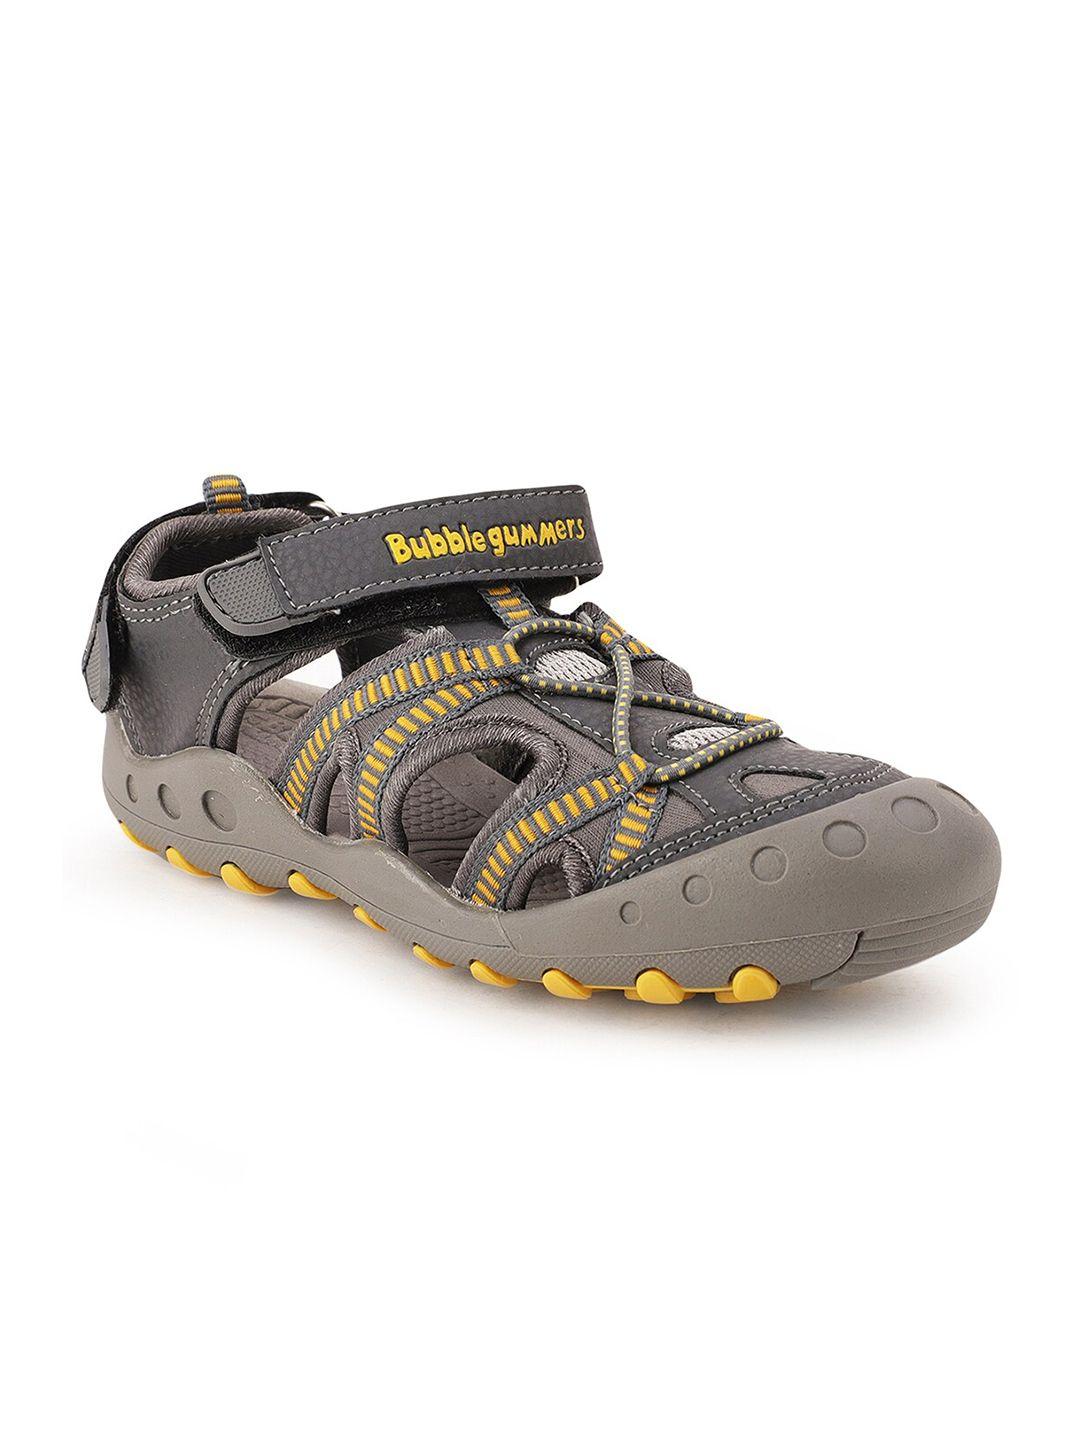 bubblegummers boys grey & yellow shoe-style sandals